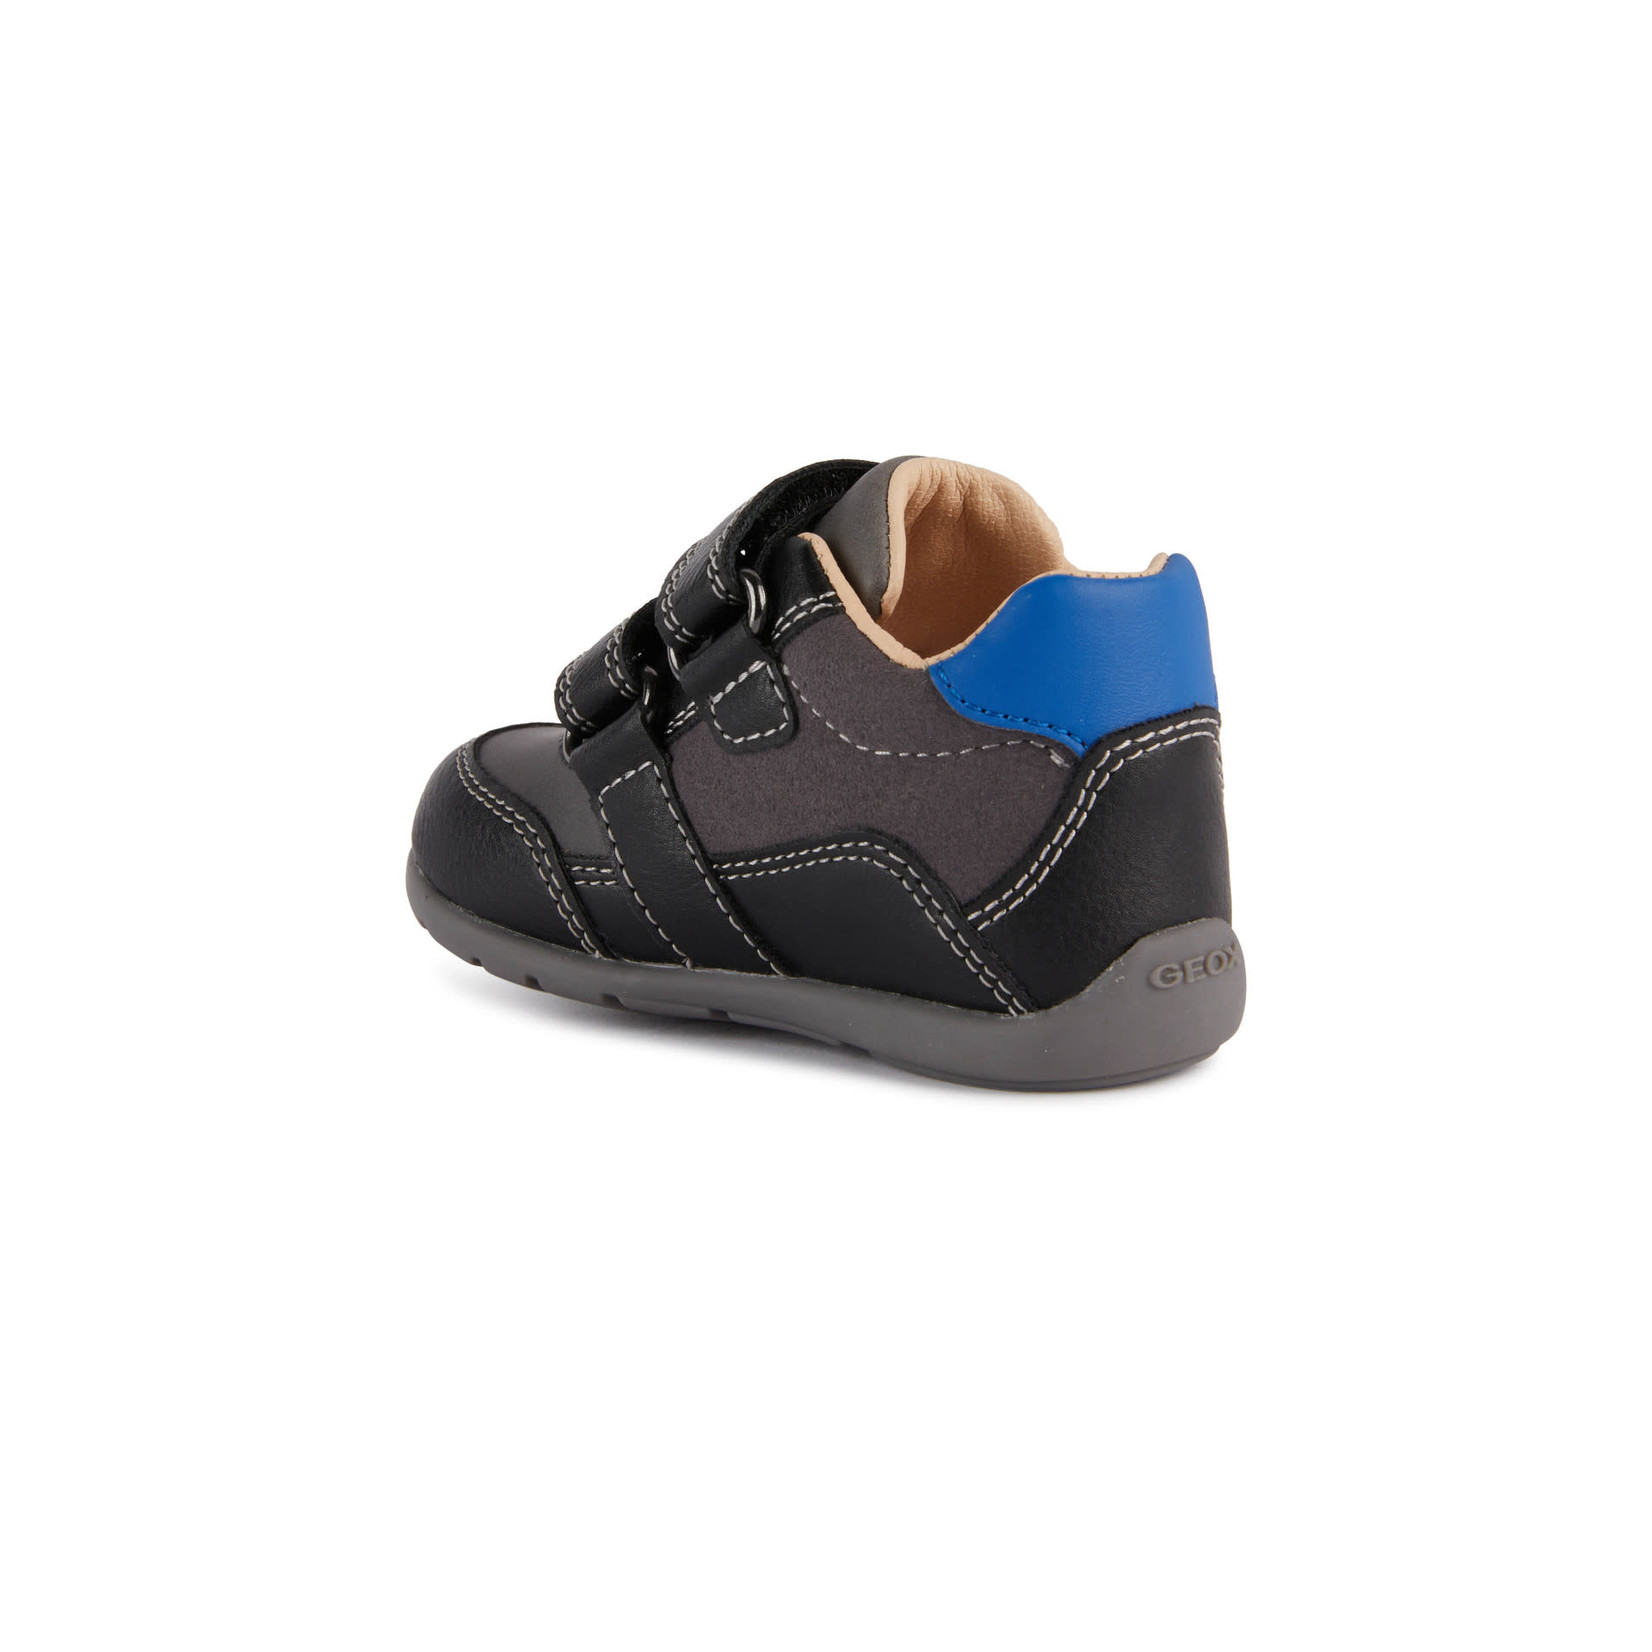 Geox GEOX - Chaussures de cuir synthétique 'Elthan - Noir / Royal'